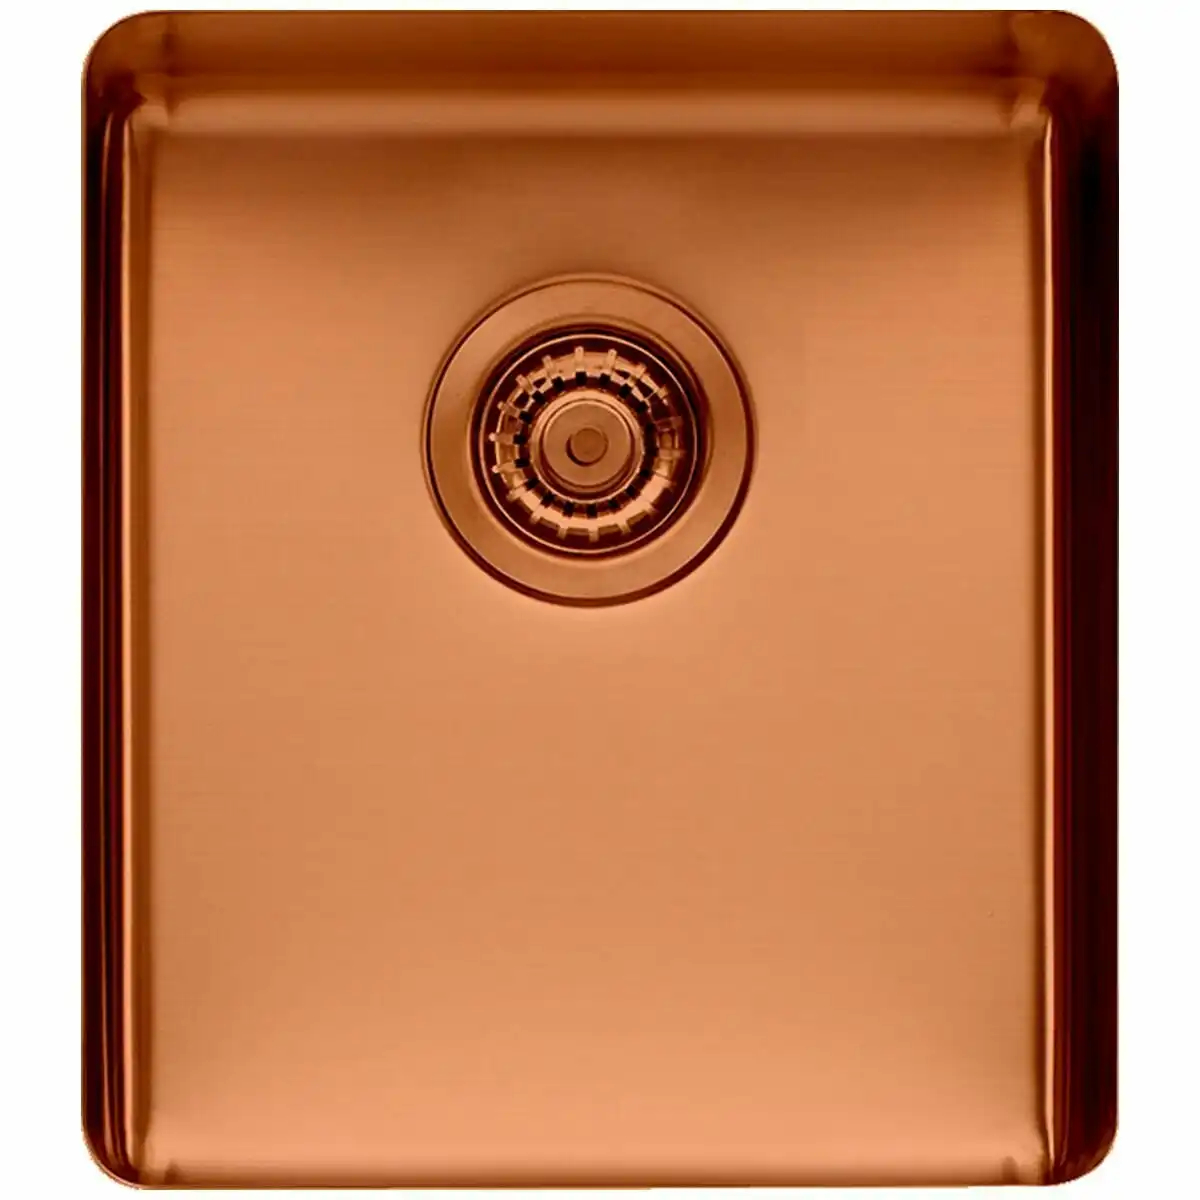 Titan Medium Single Bowl Sink Copper